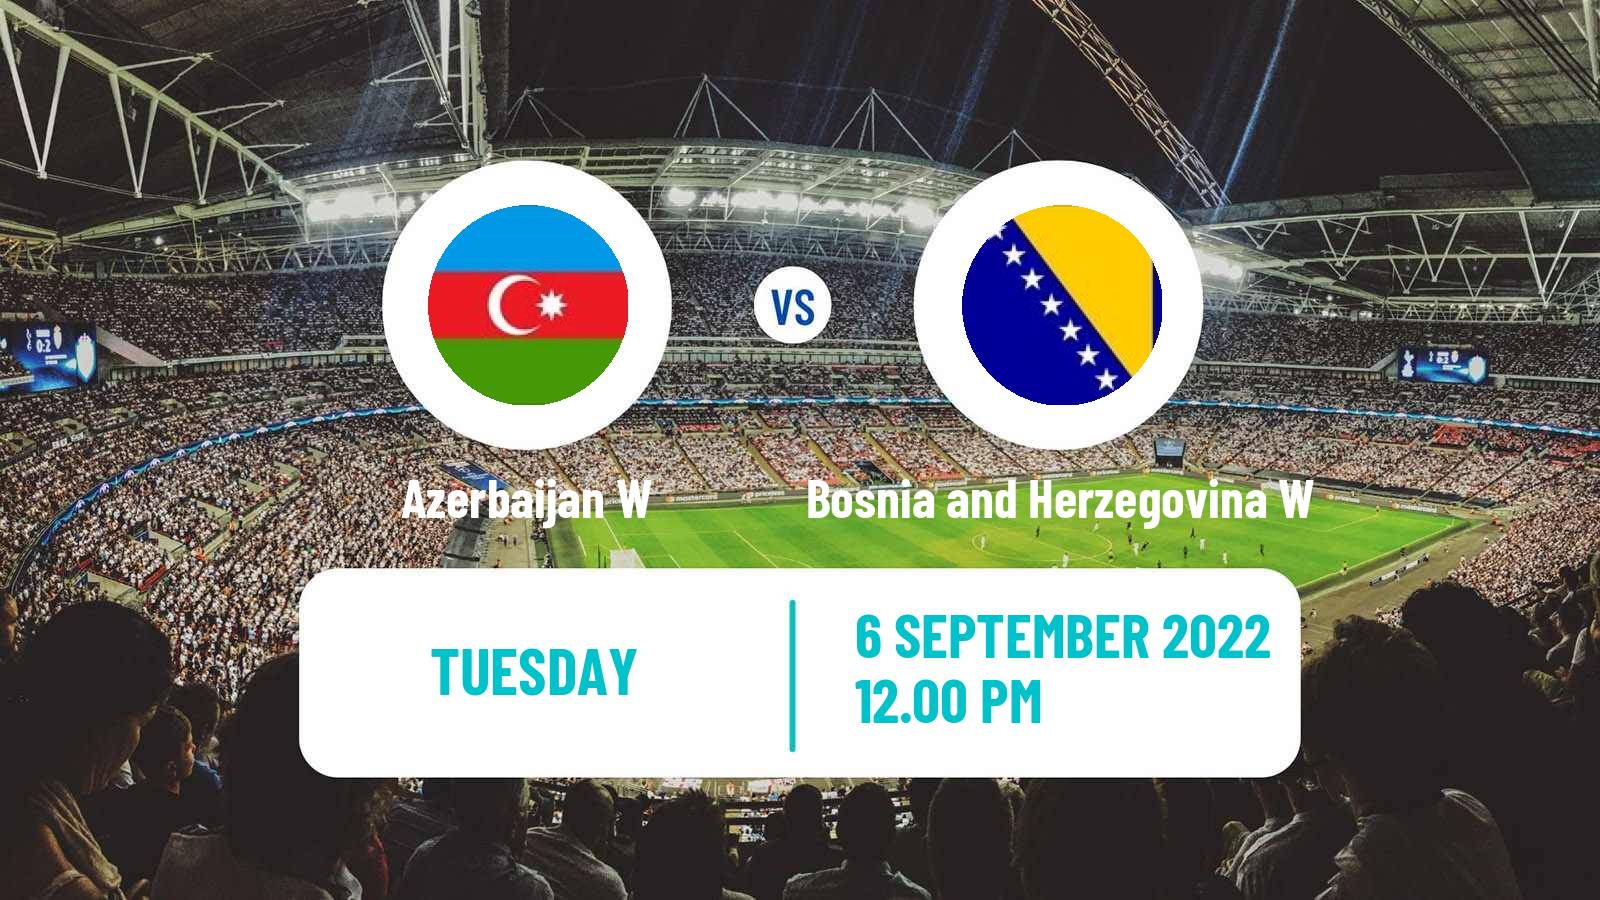 Soccer FIFA World Cup Women Azerbaijan W - Bosnia and Herzegovina W